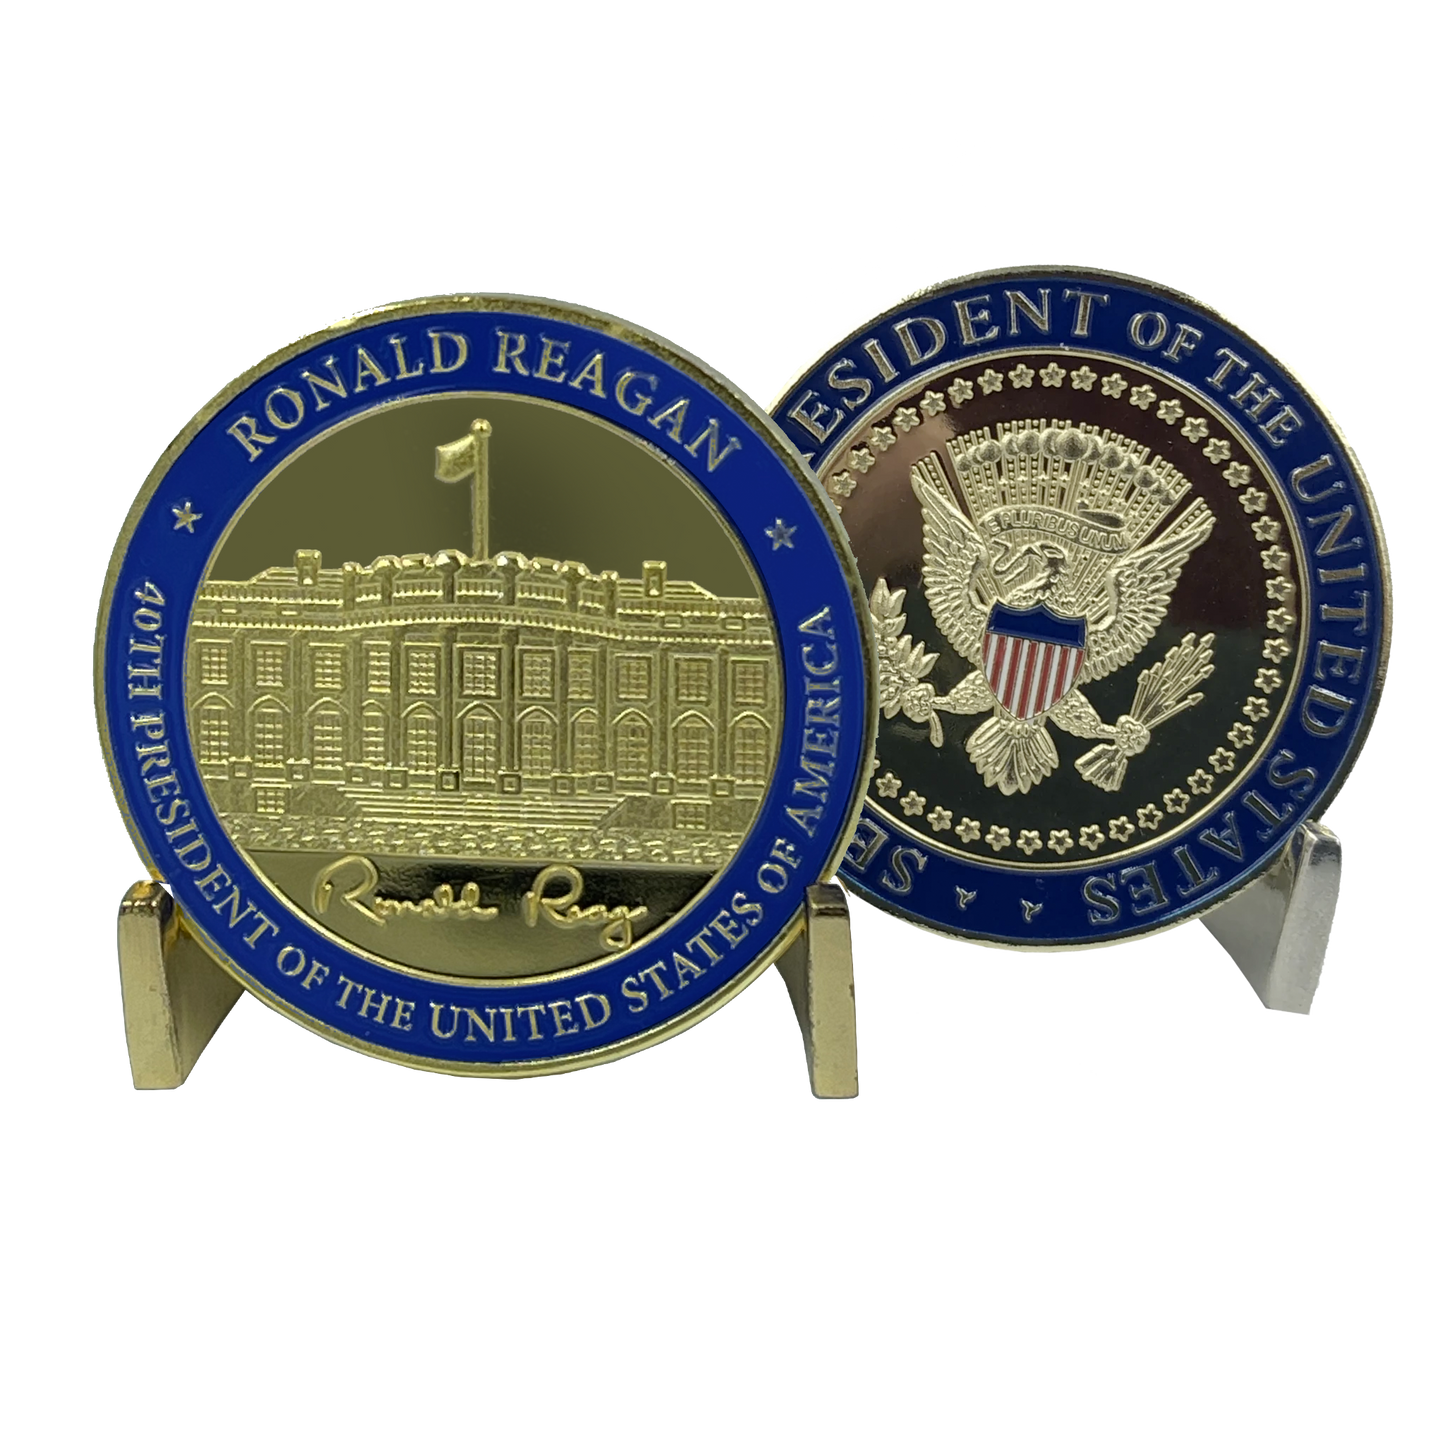 EL7-01 40th President Ronald Reagan Challenge Coin White House POTUS coin